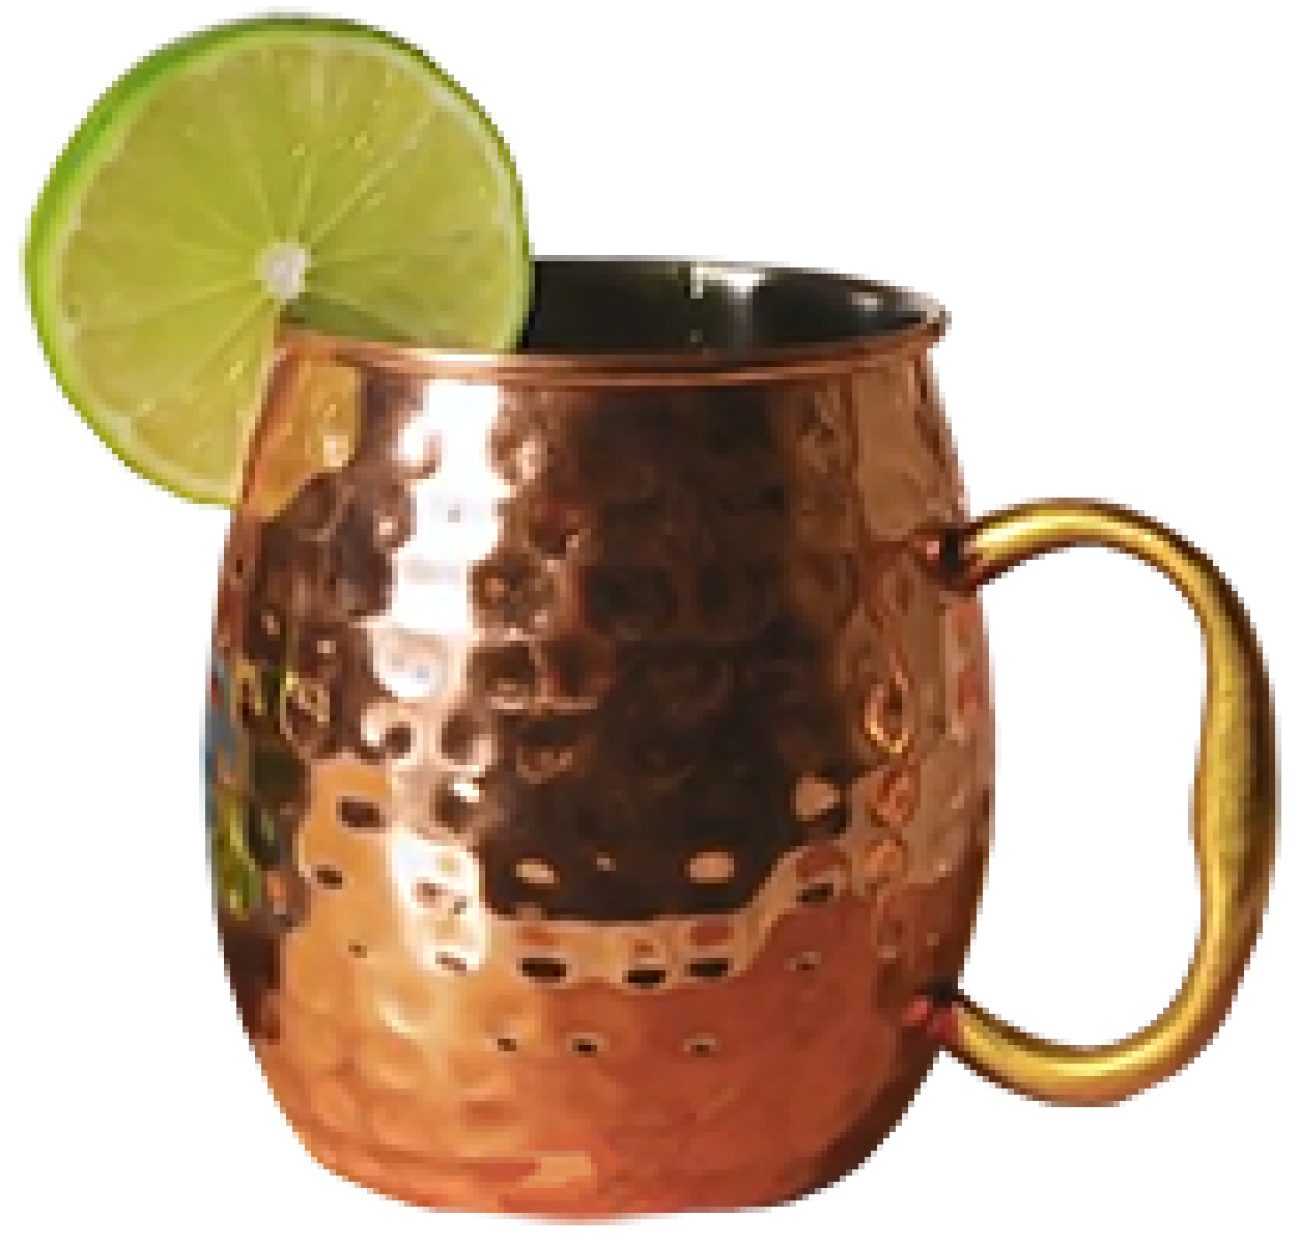 Copper mug with lime wheel garnish